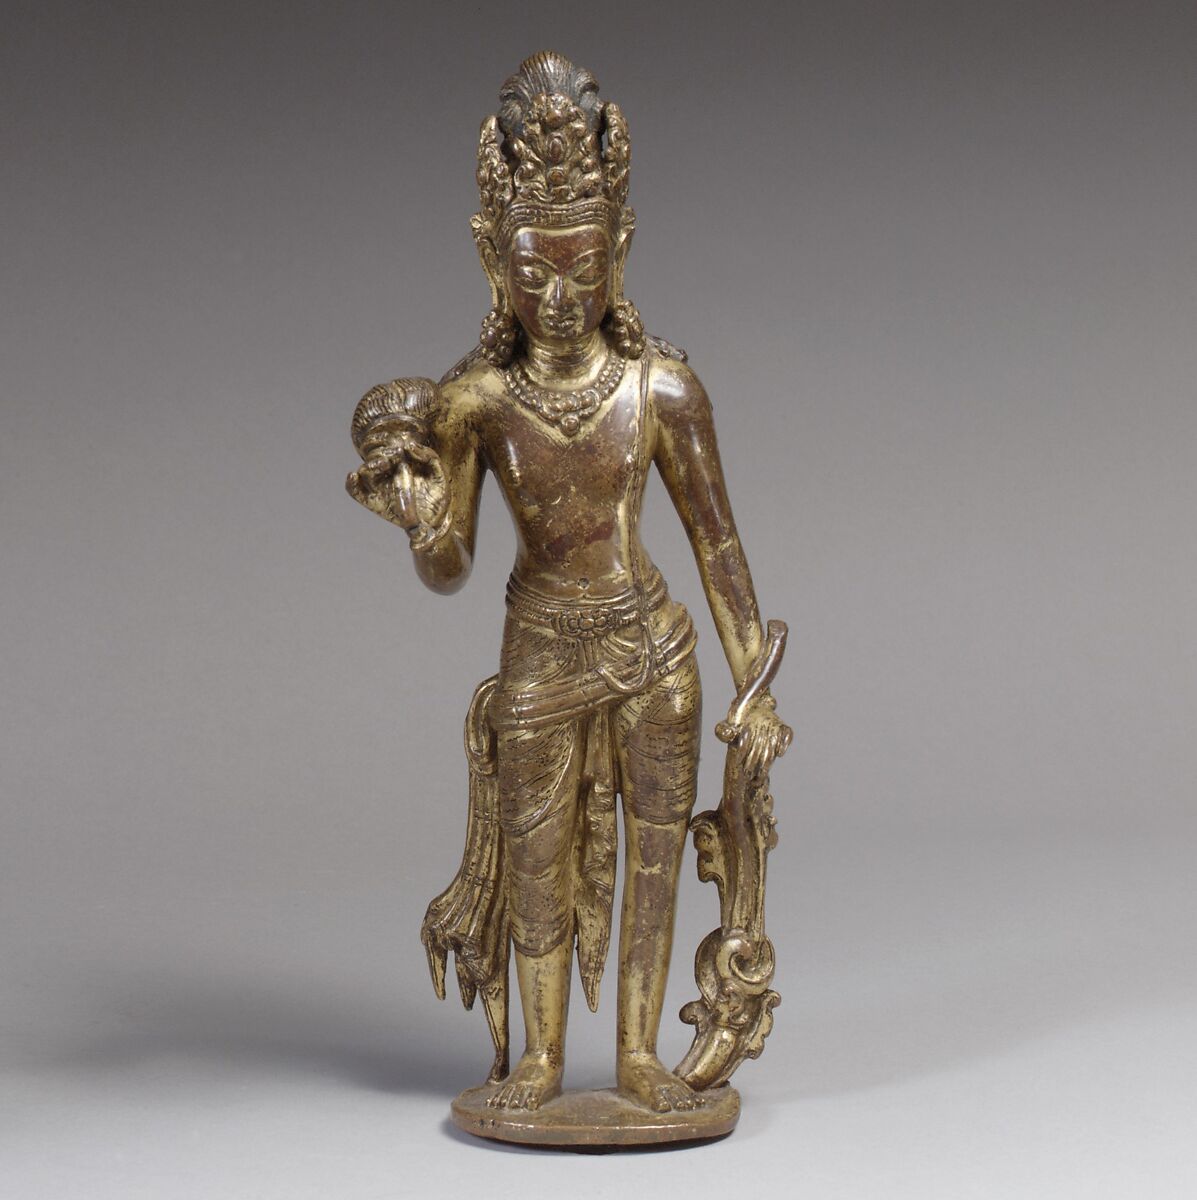 Bodhisattva, probably Padmapani Lokeshvara